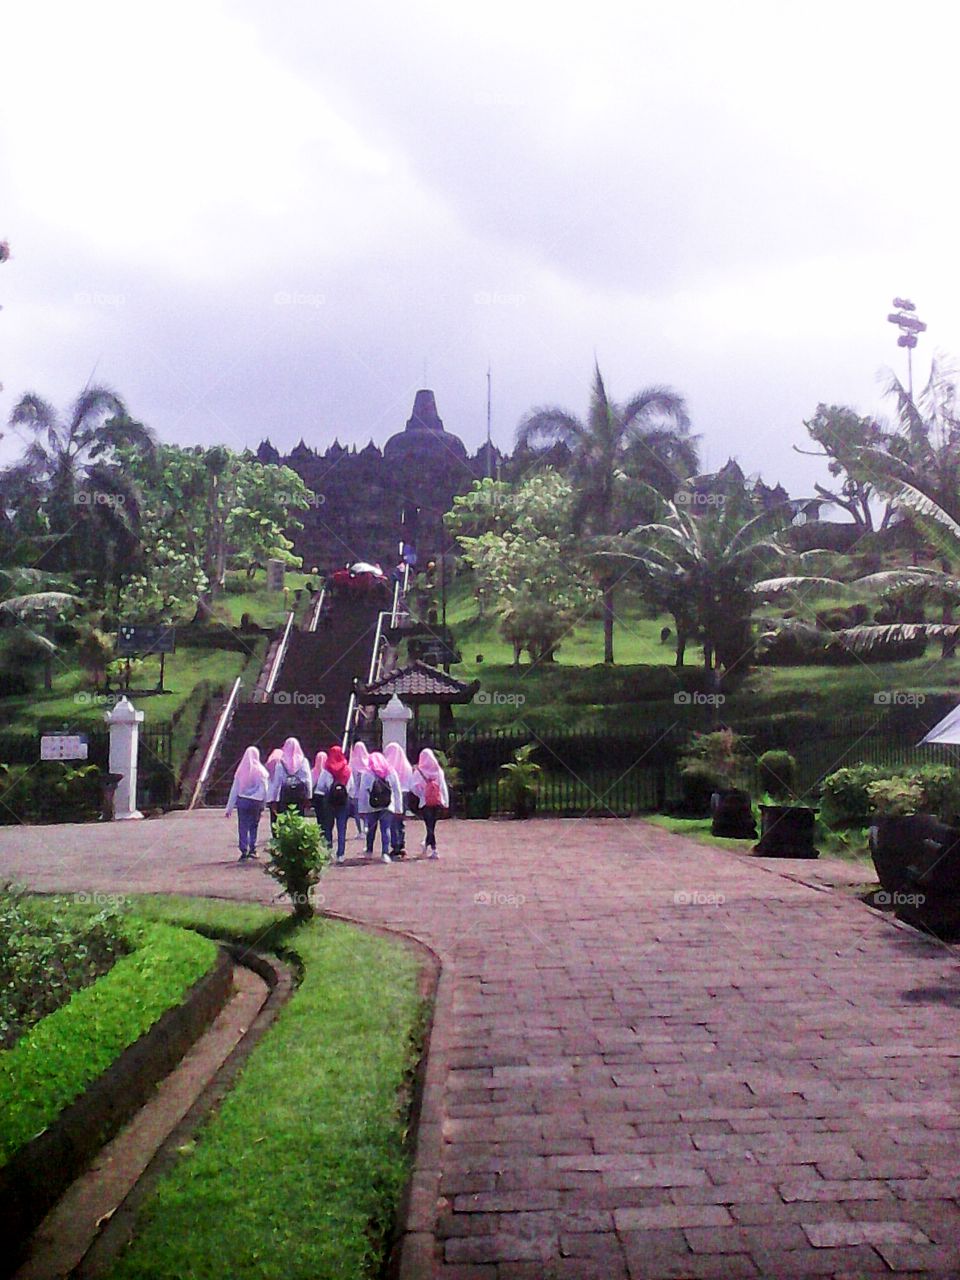 The Travelling tourism in Borobudur Temple destination tourism